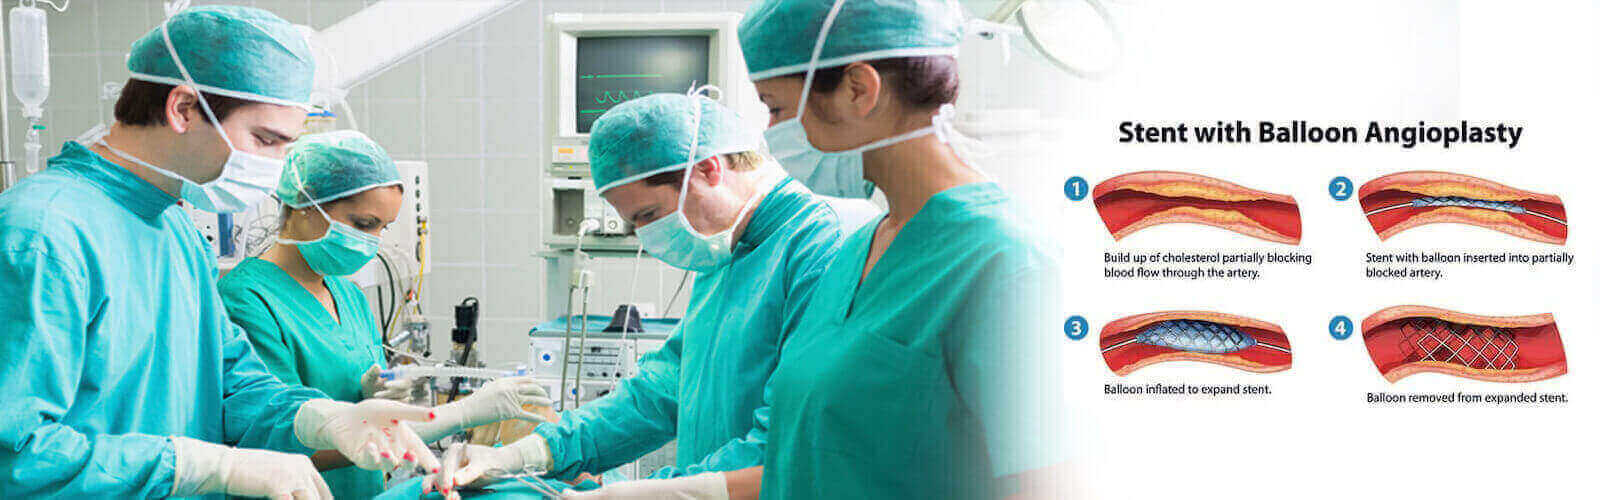 Angioplasty Surgery in Qatar